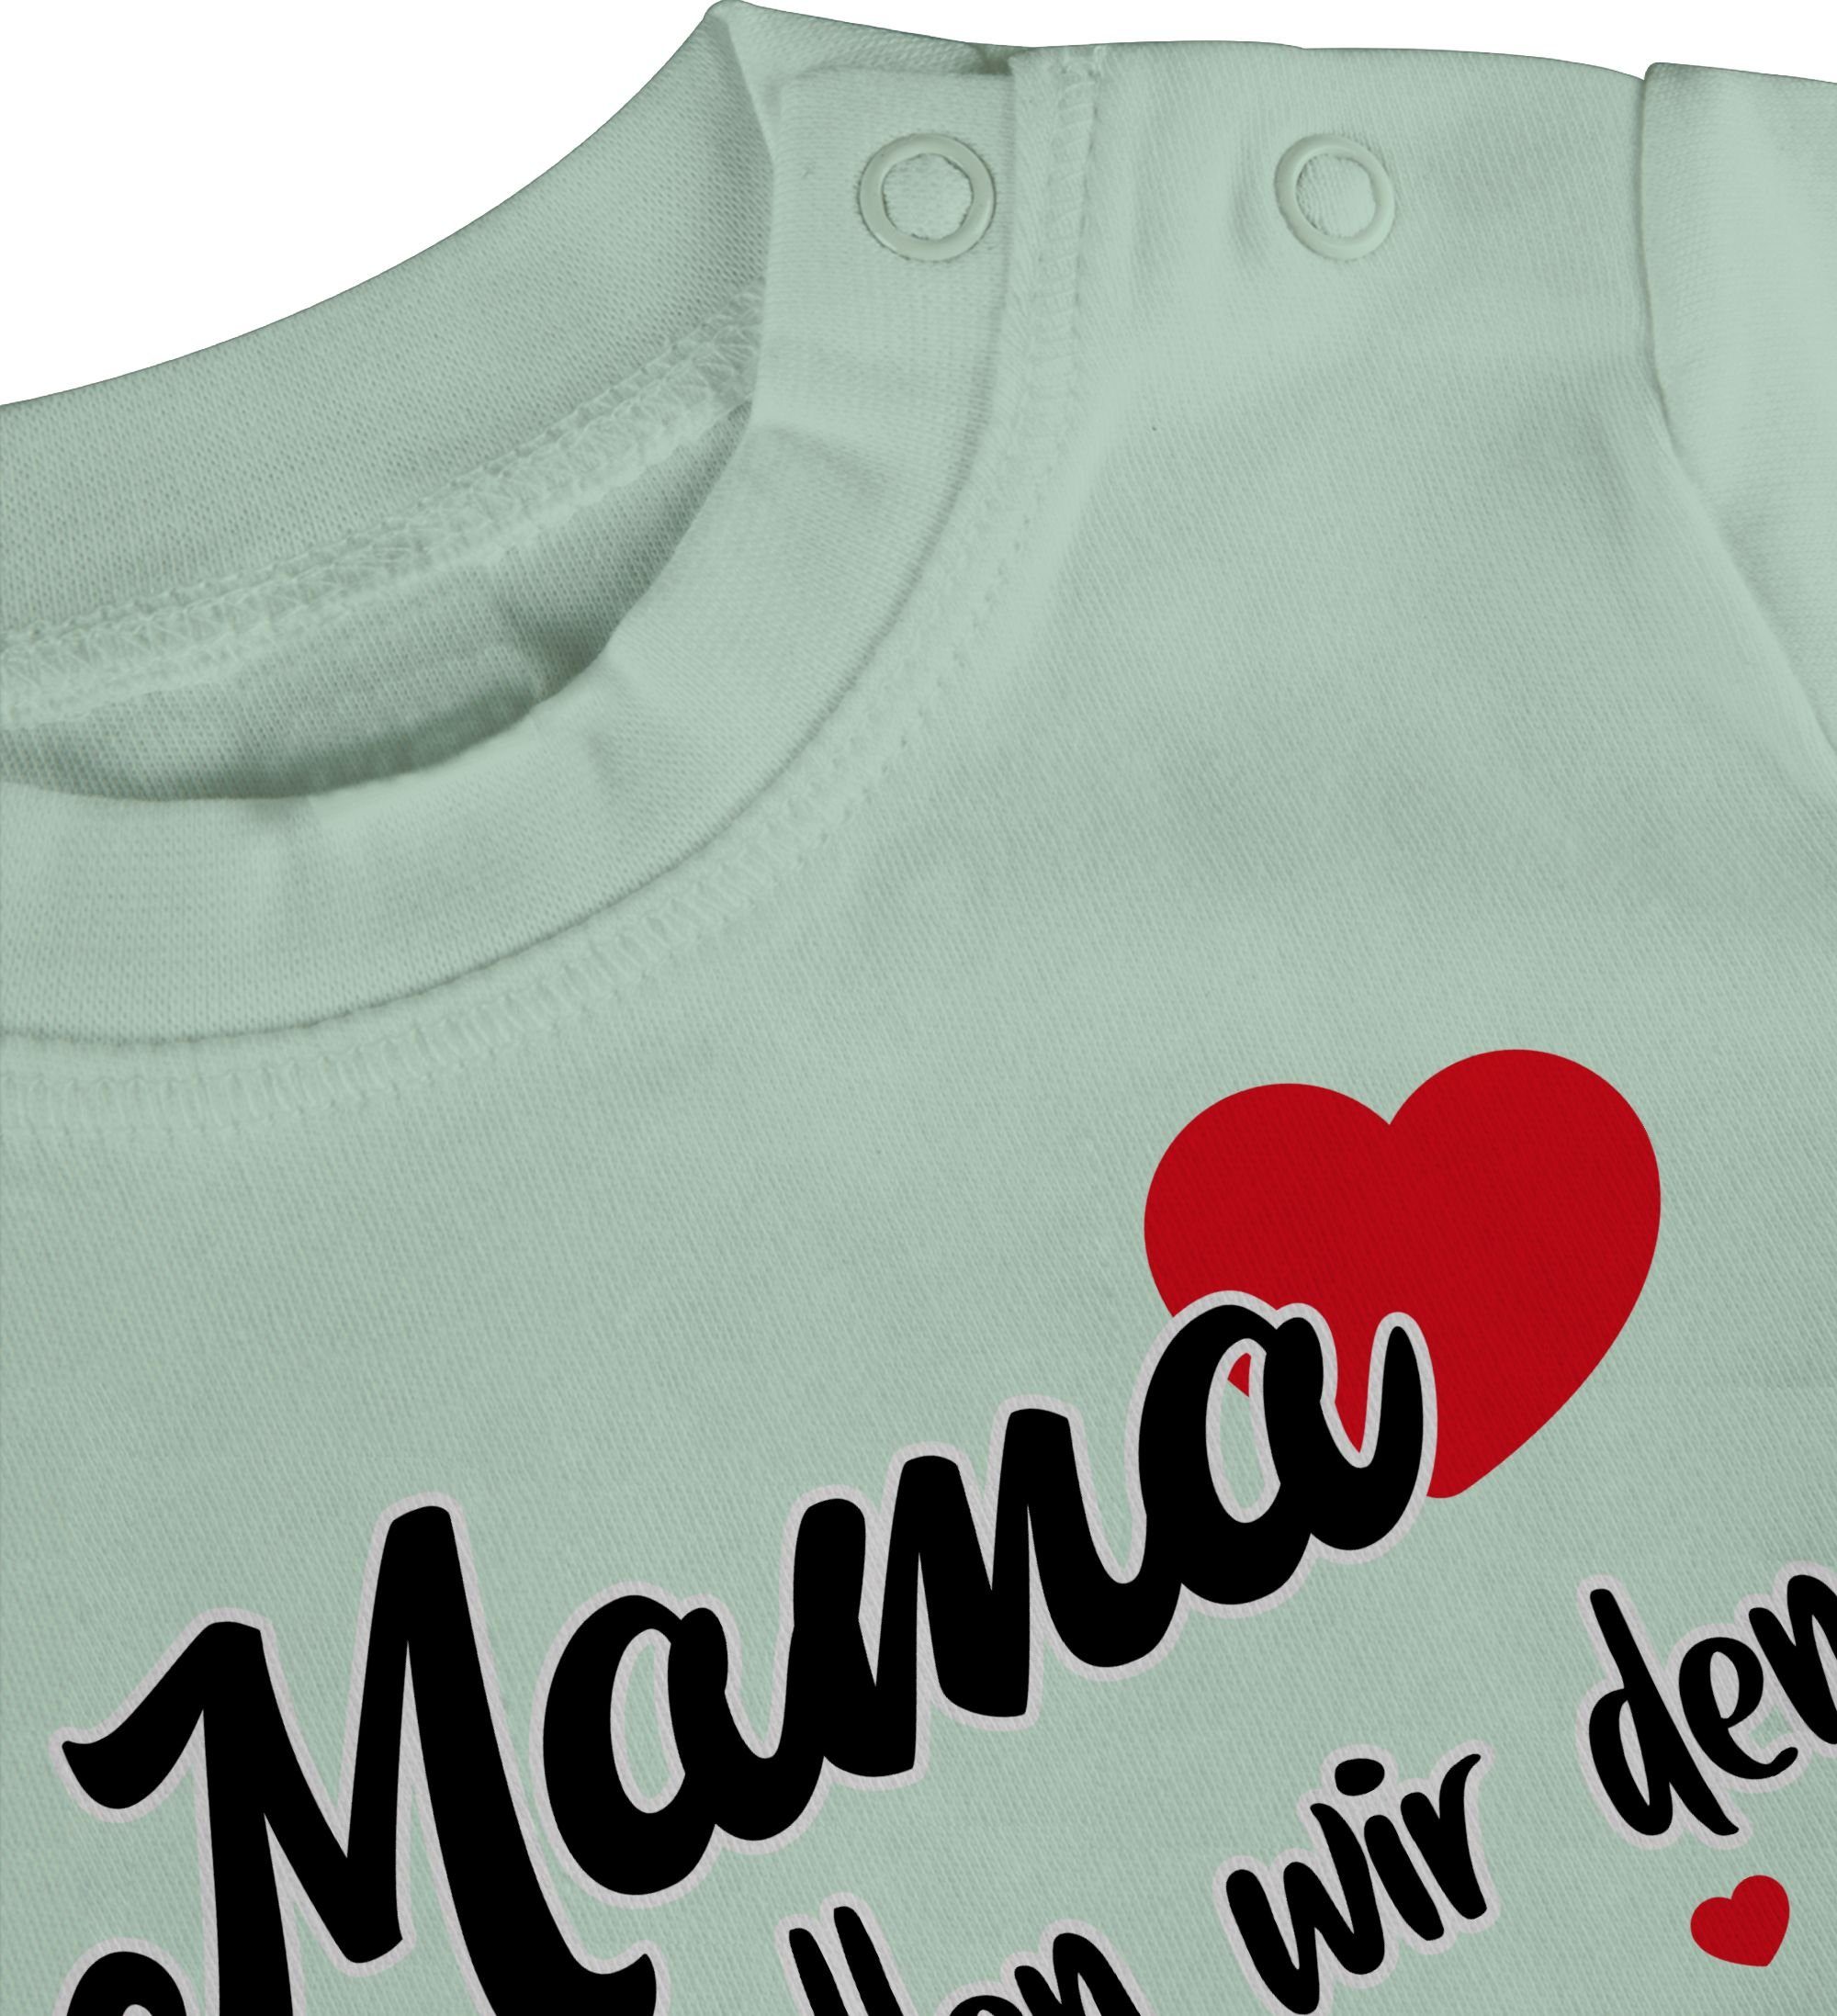 Shirtracer T-Shirt Mama wollen wir heiraten - Heiratsantrag Papa Hochzeit - Baby 2 Mintgrün